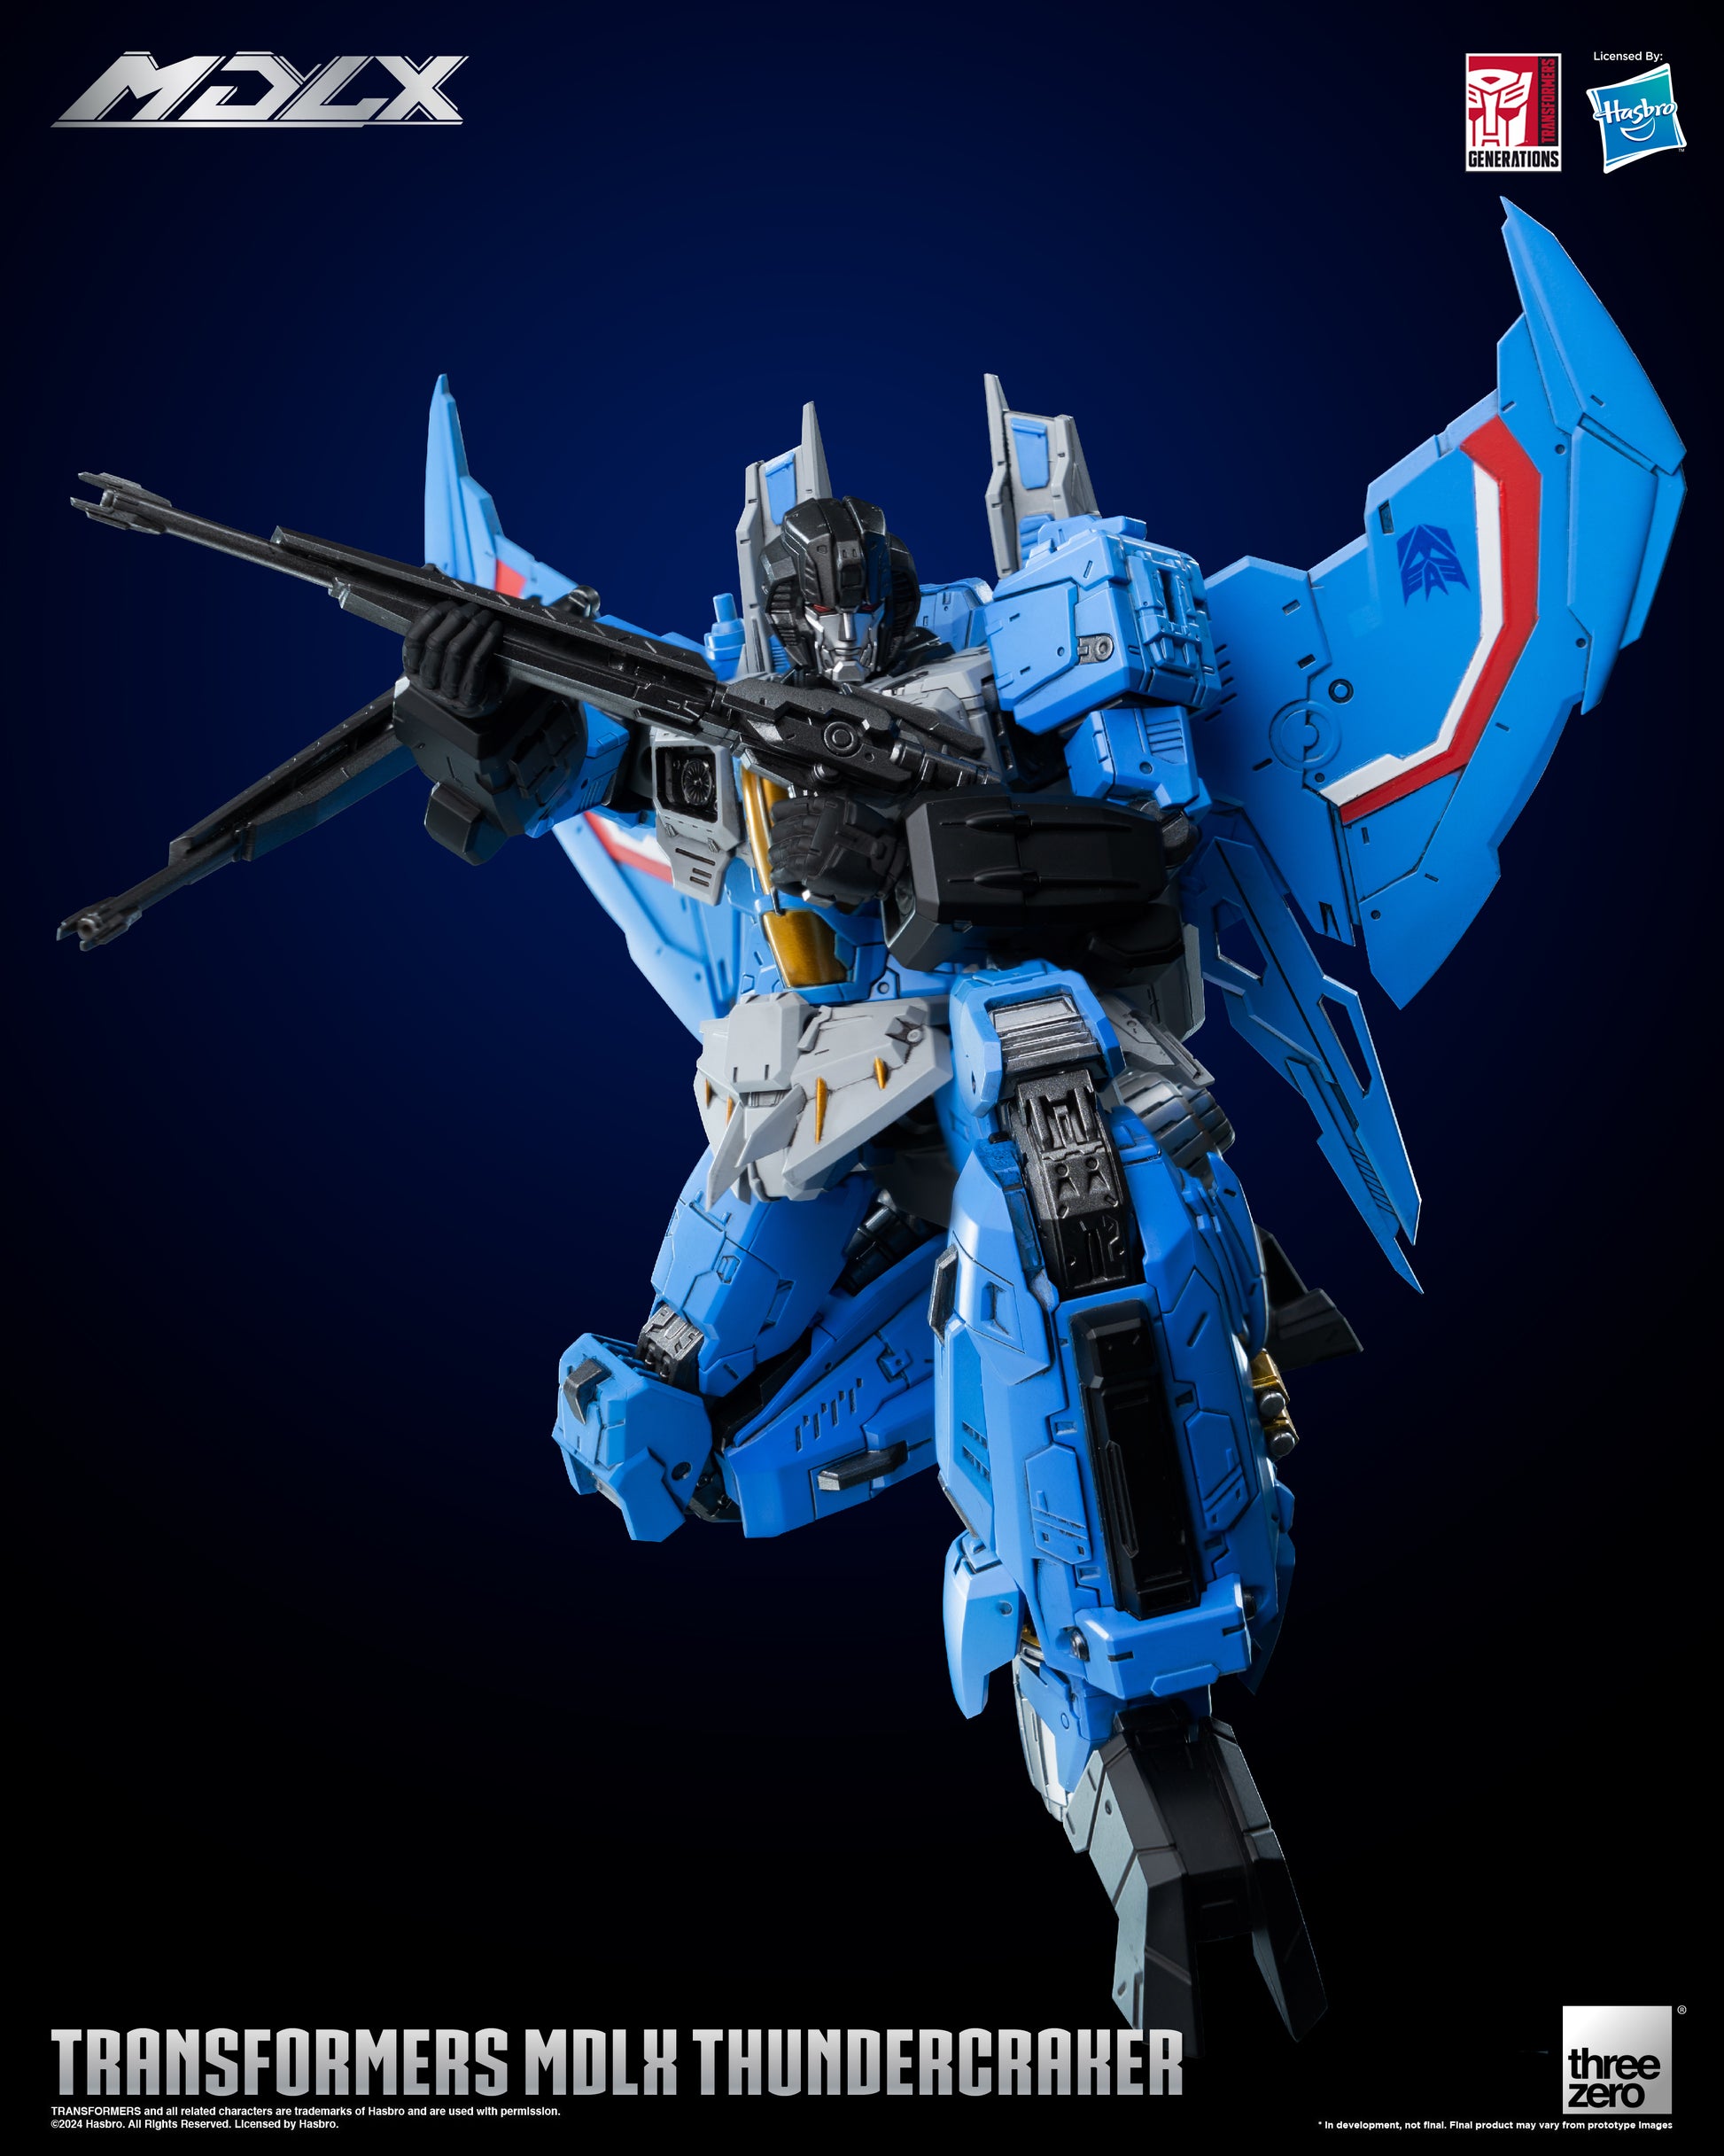 Transformers MDLX Articulated Figure Series Thundercracker kneeling with guns